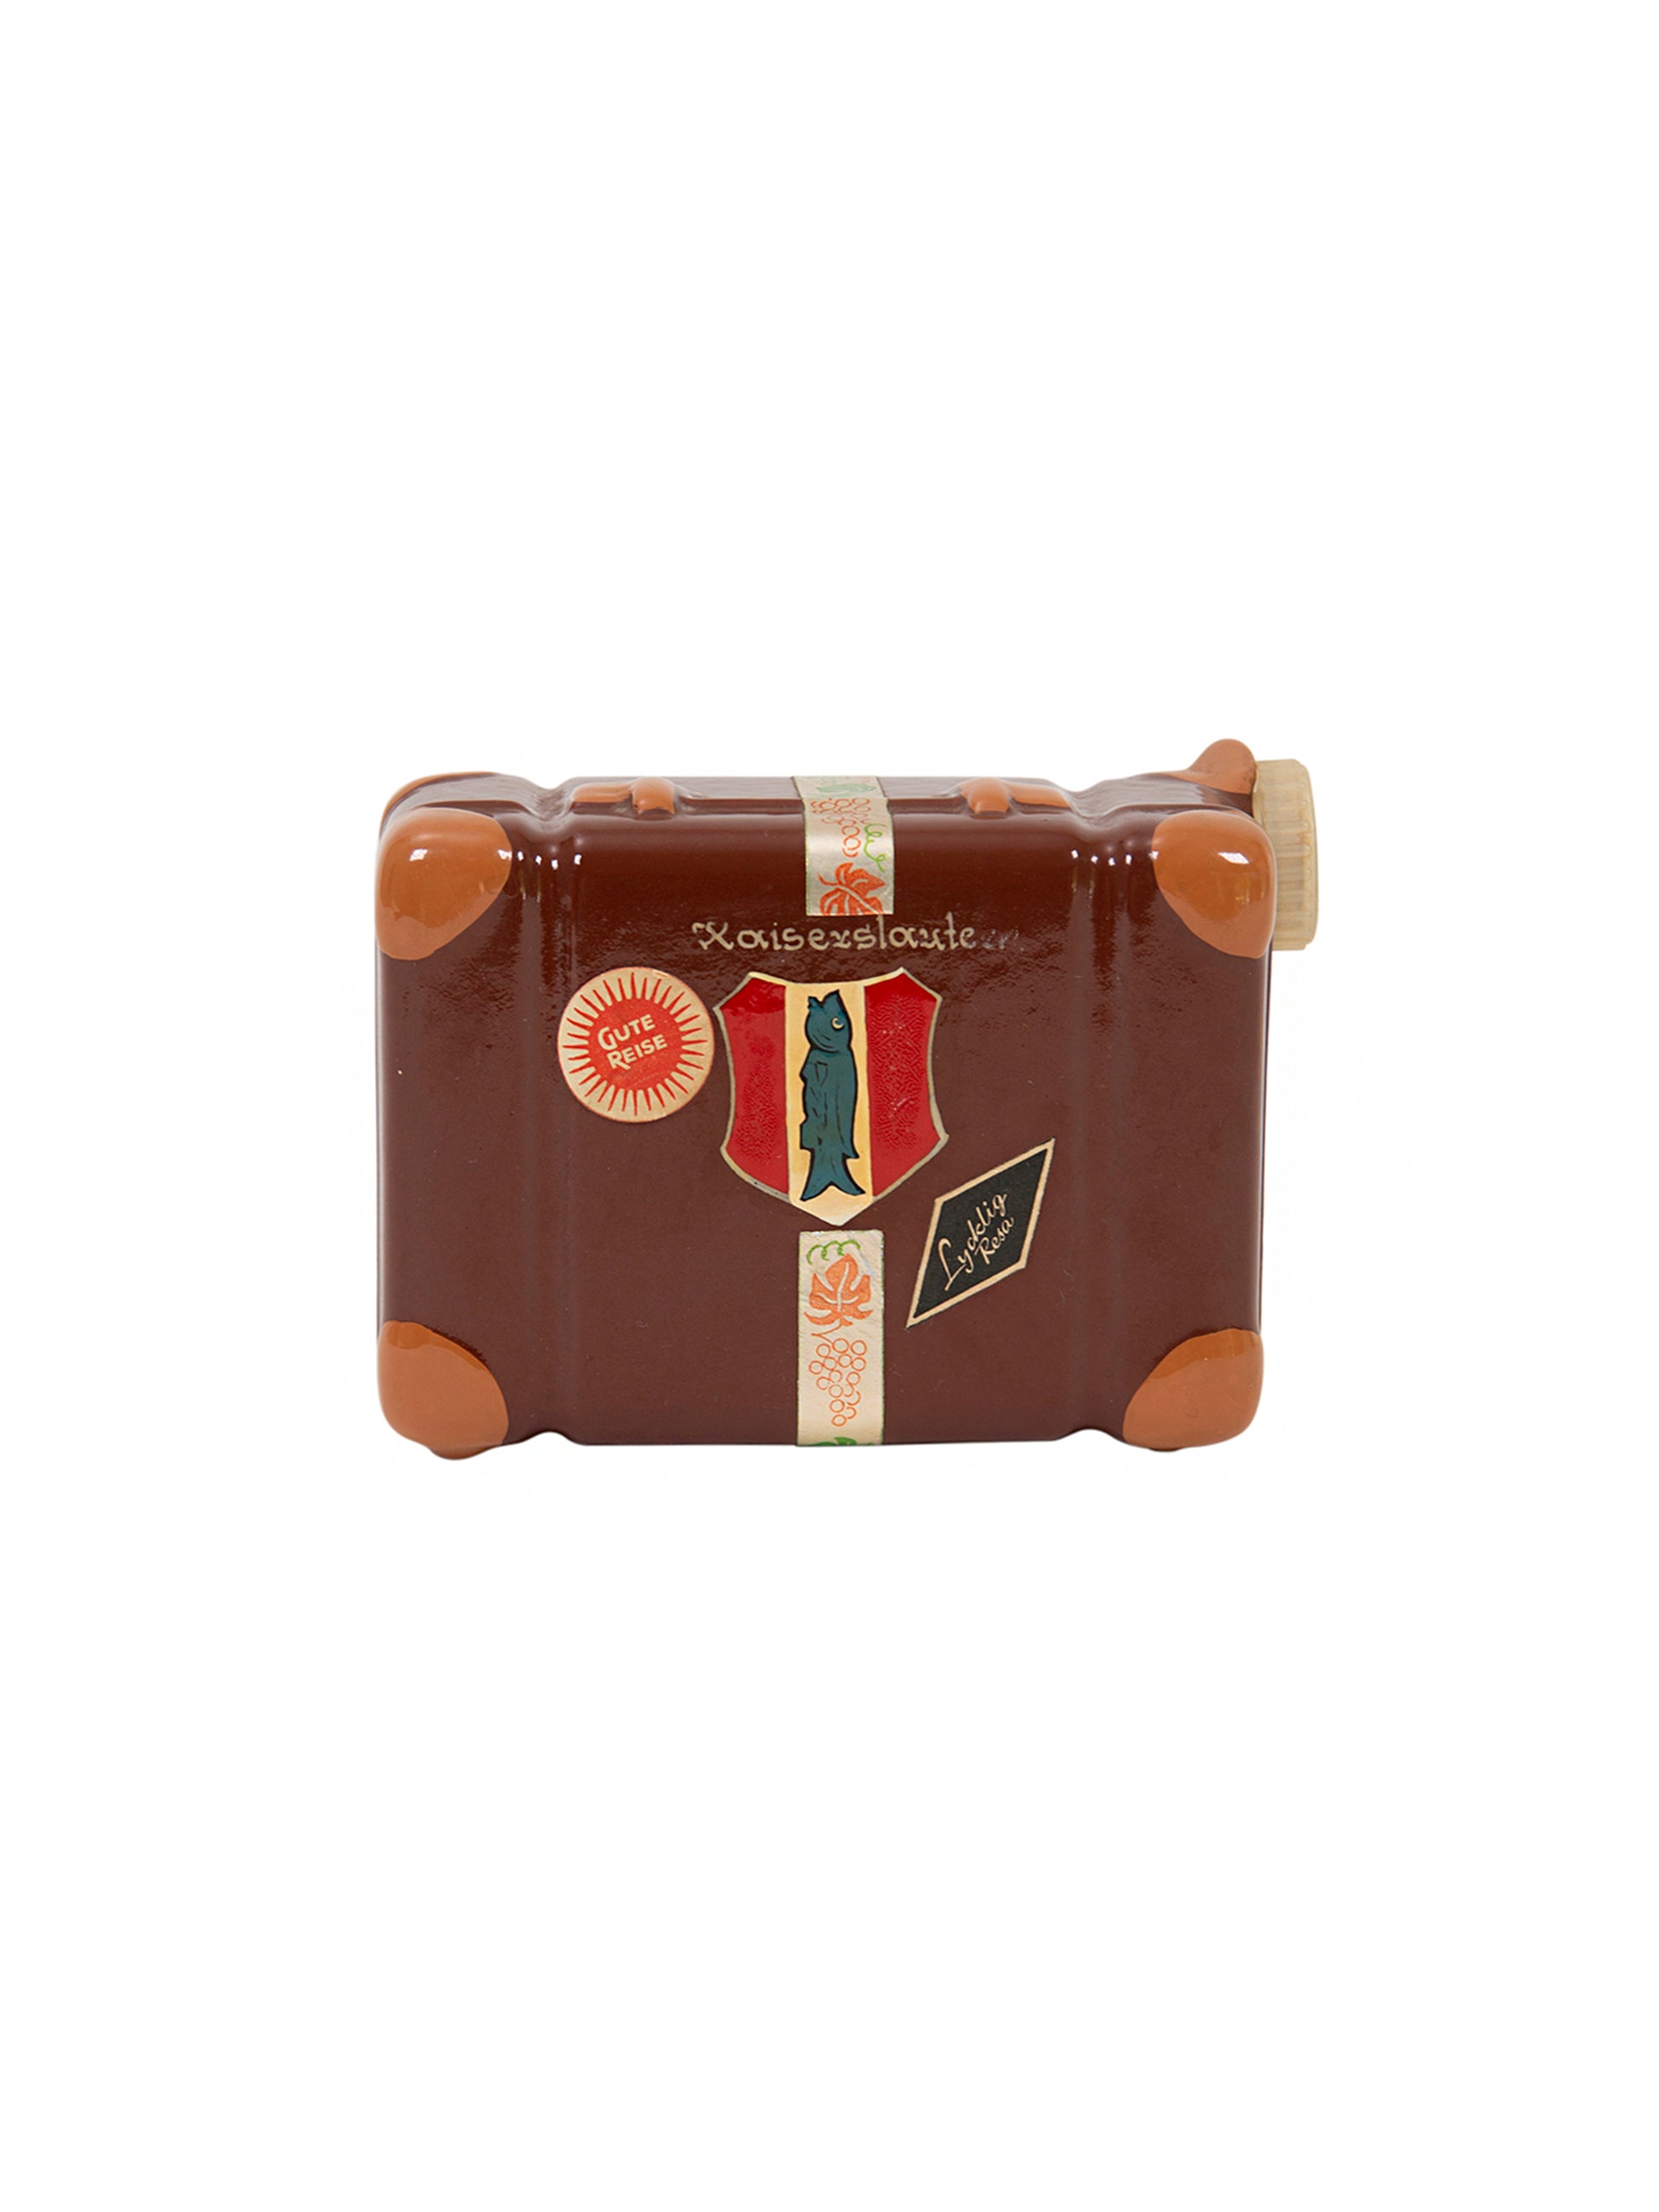 Shop the Vintage Travel Suitcase Liquor Decanter at Weston Table